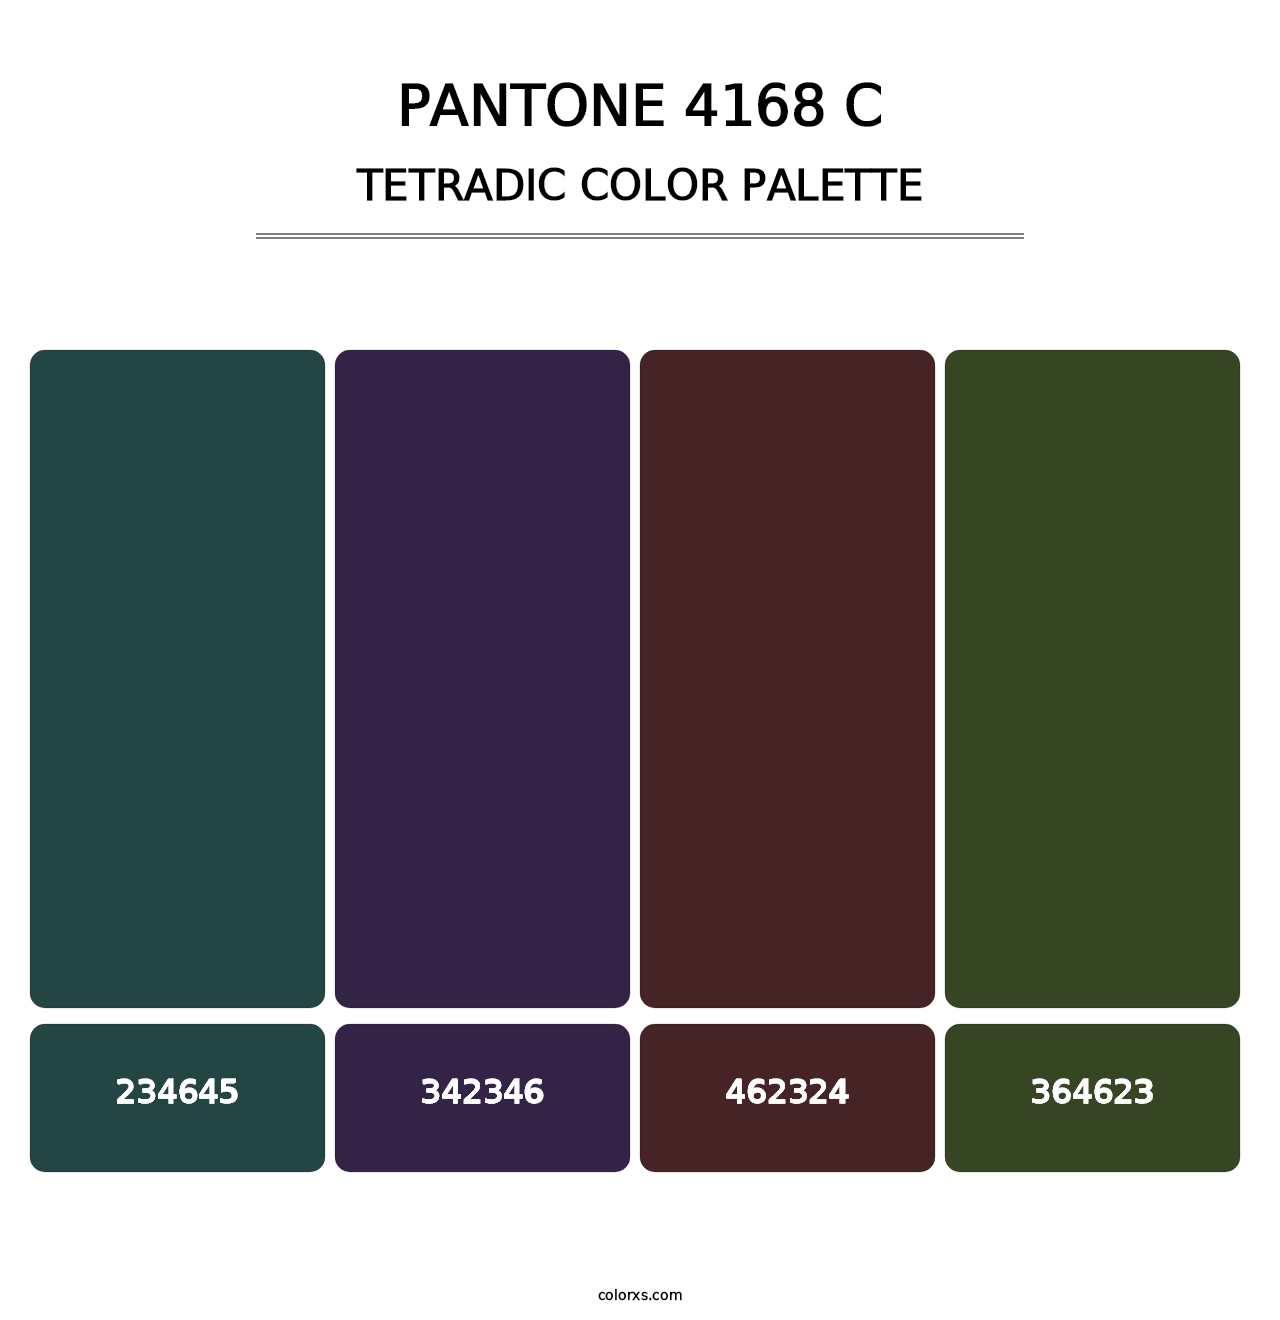 PANTONE 4168 C - Tetradic Color Palette